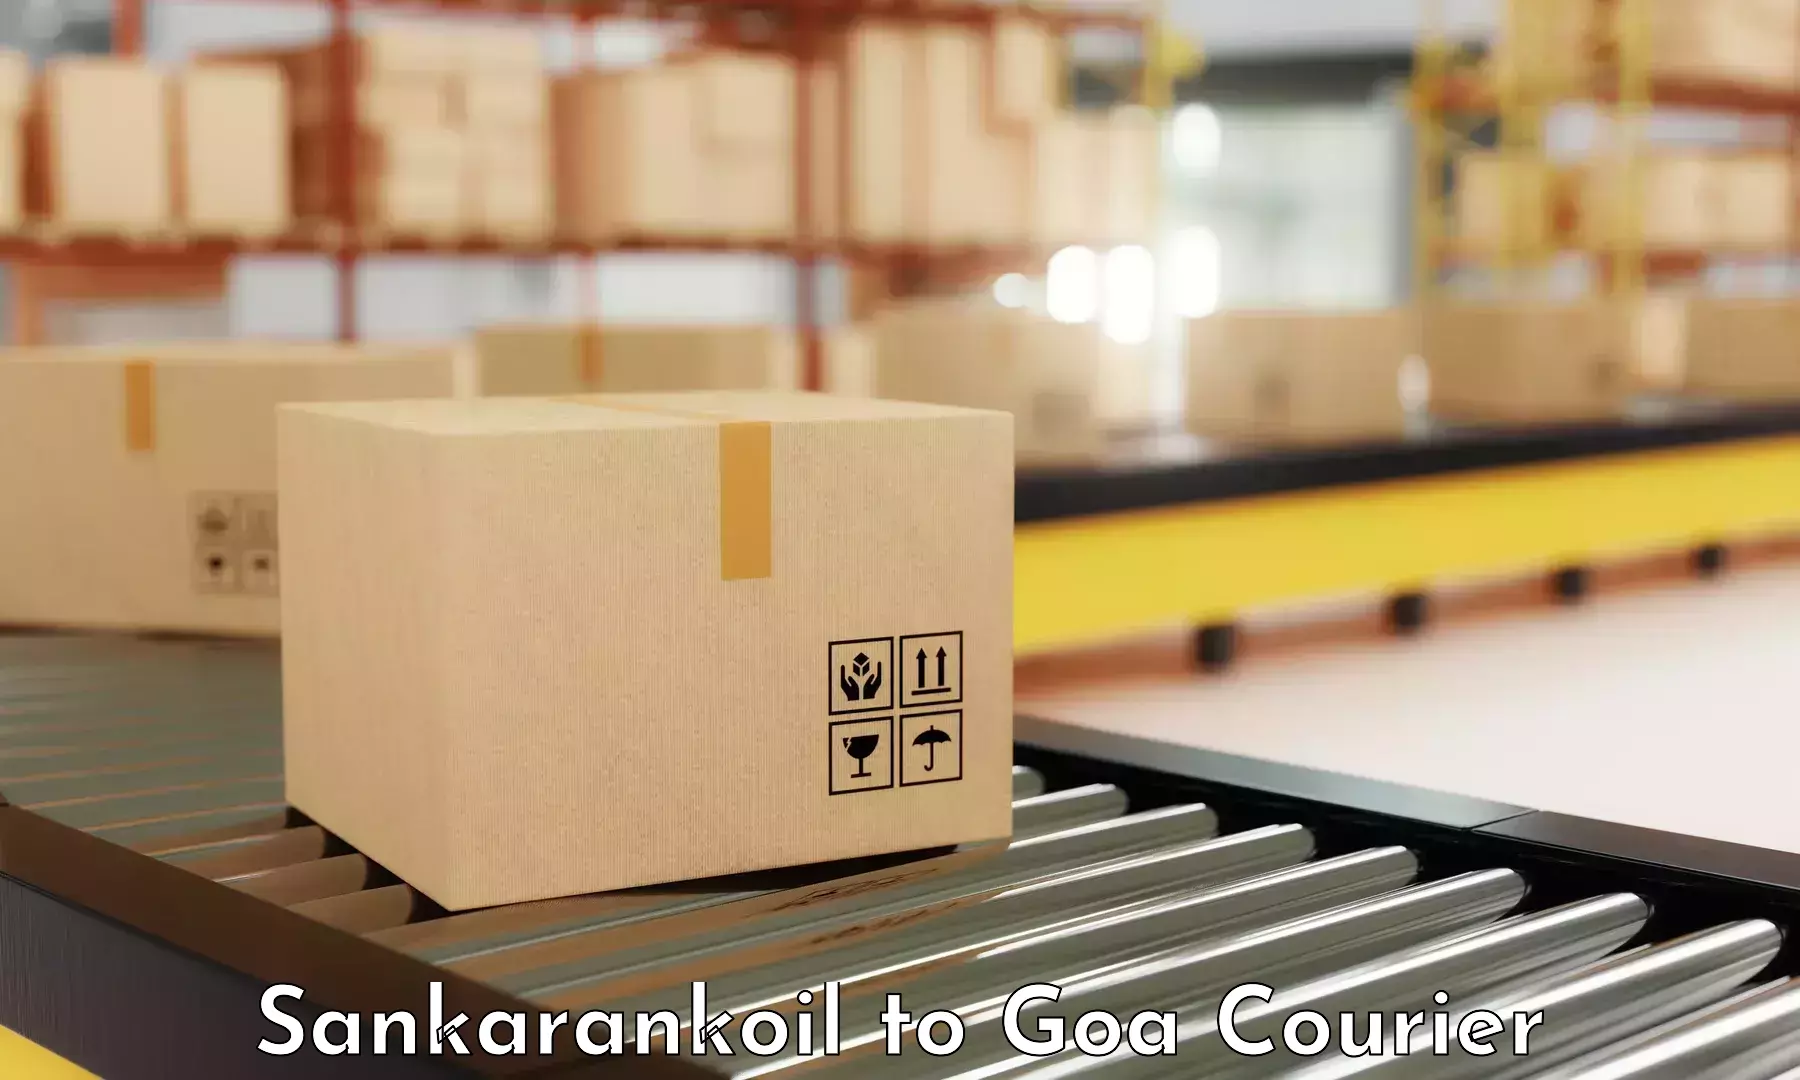 Courier service innovation Sankarankoil to Margao